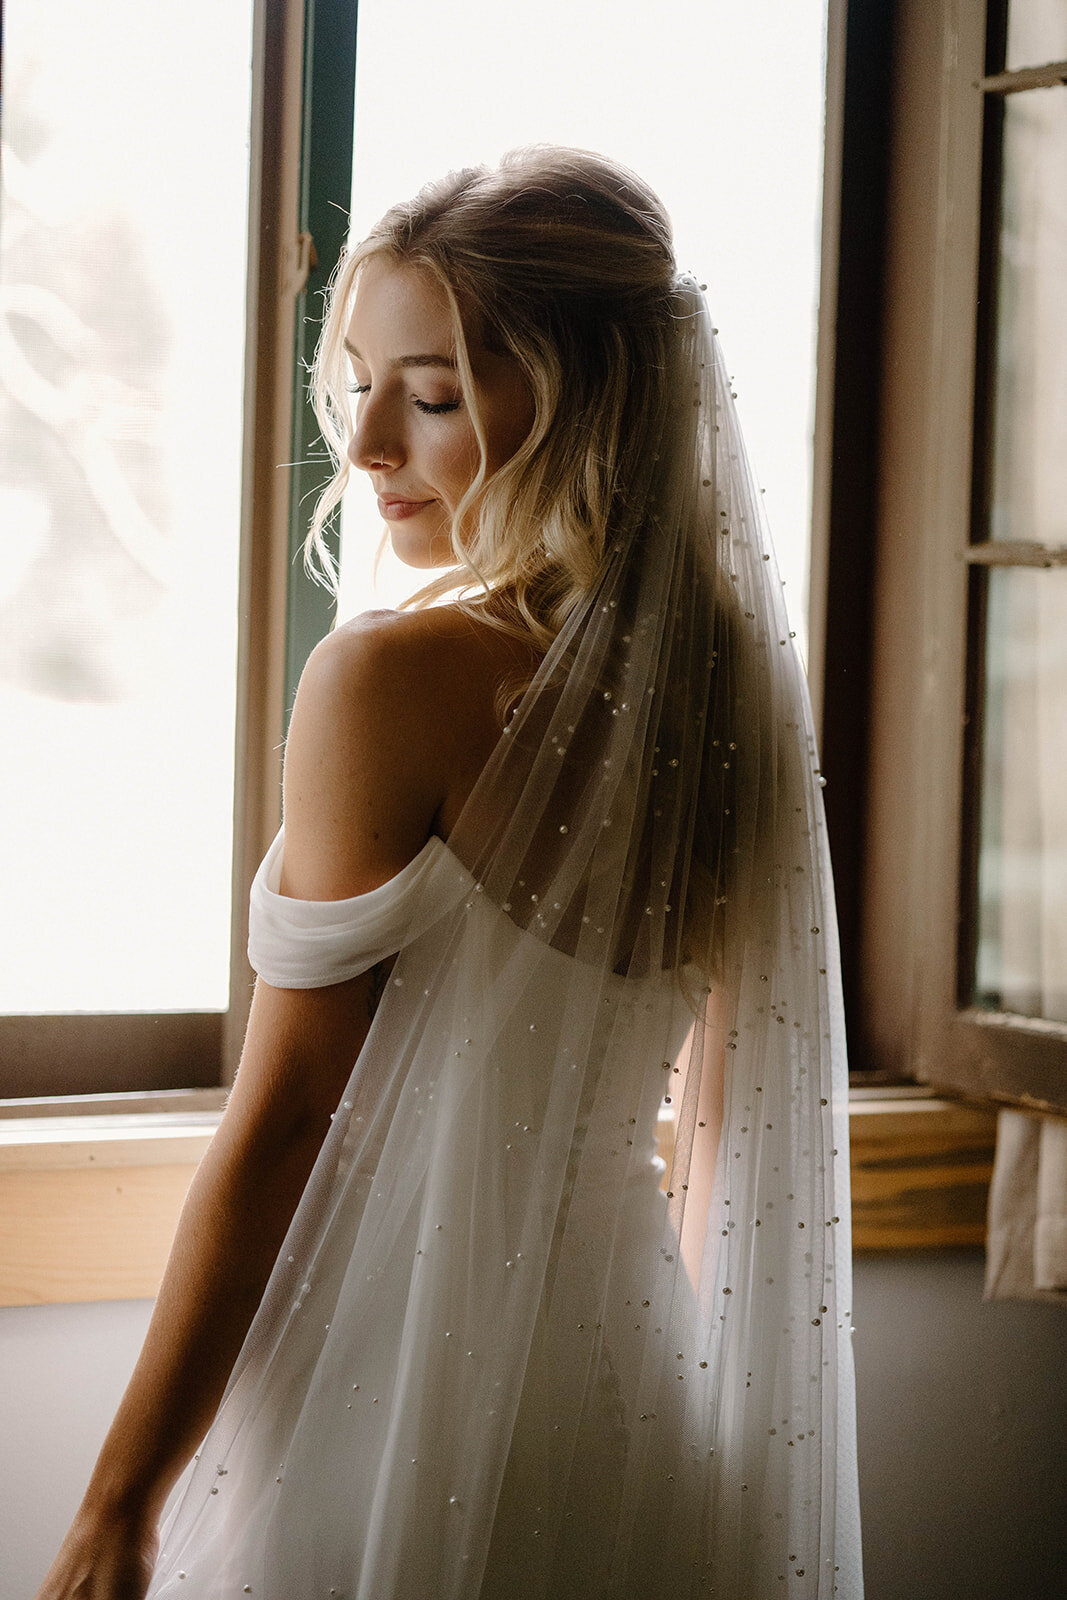 Stunning bride looks over her shoulder in bridal portrait framed in front of open window.